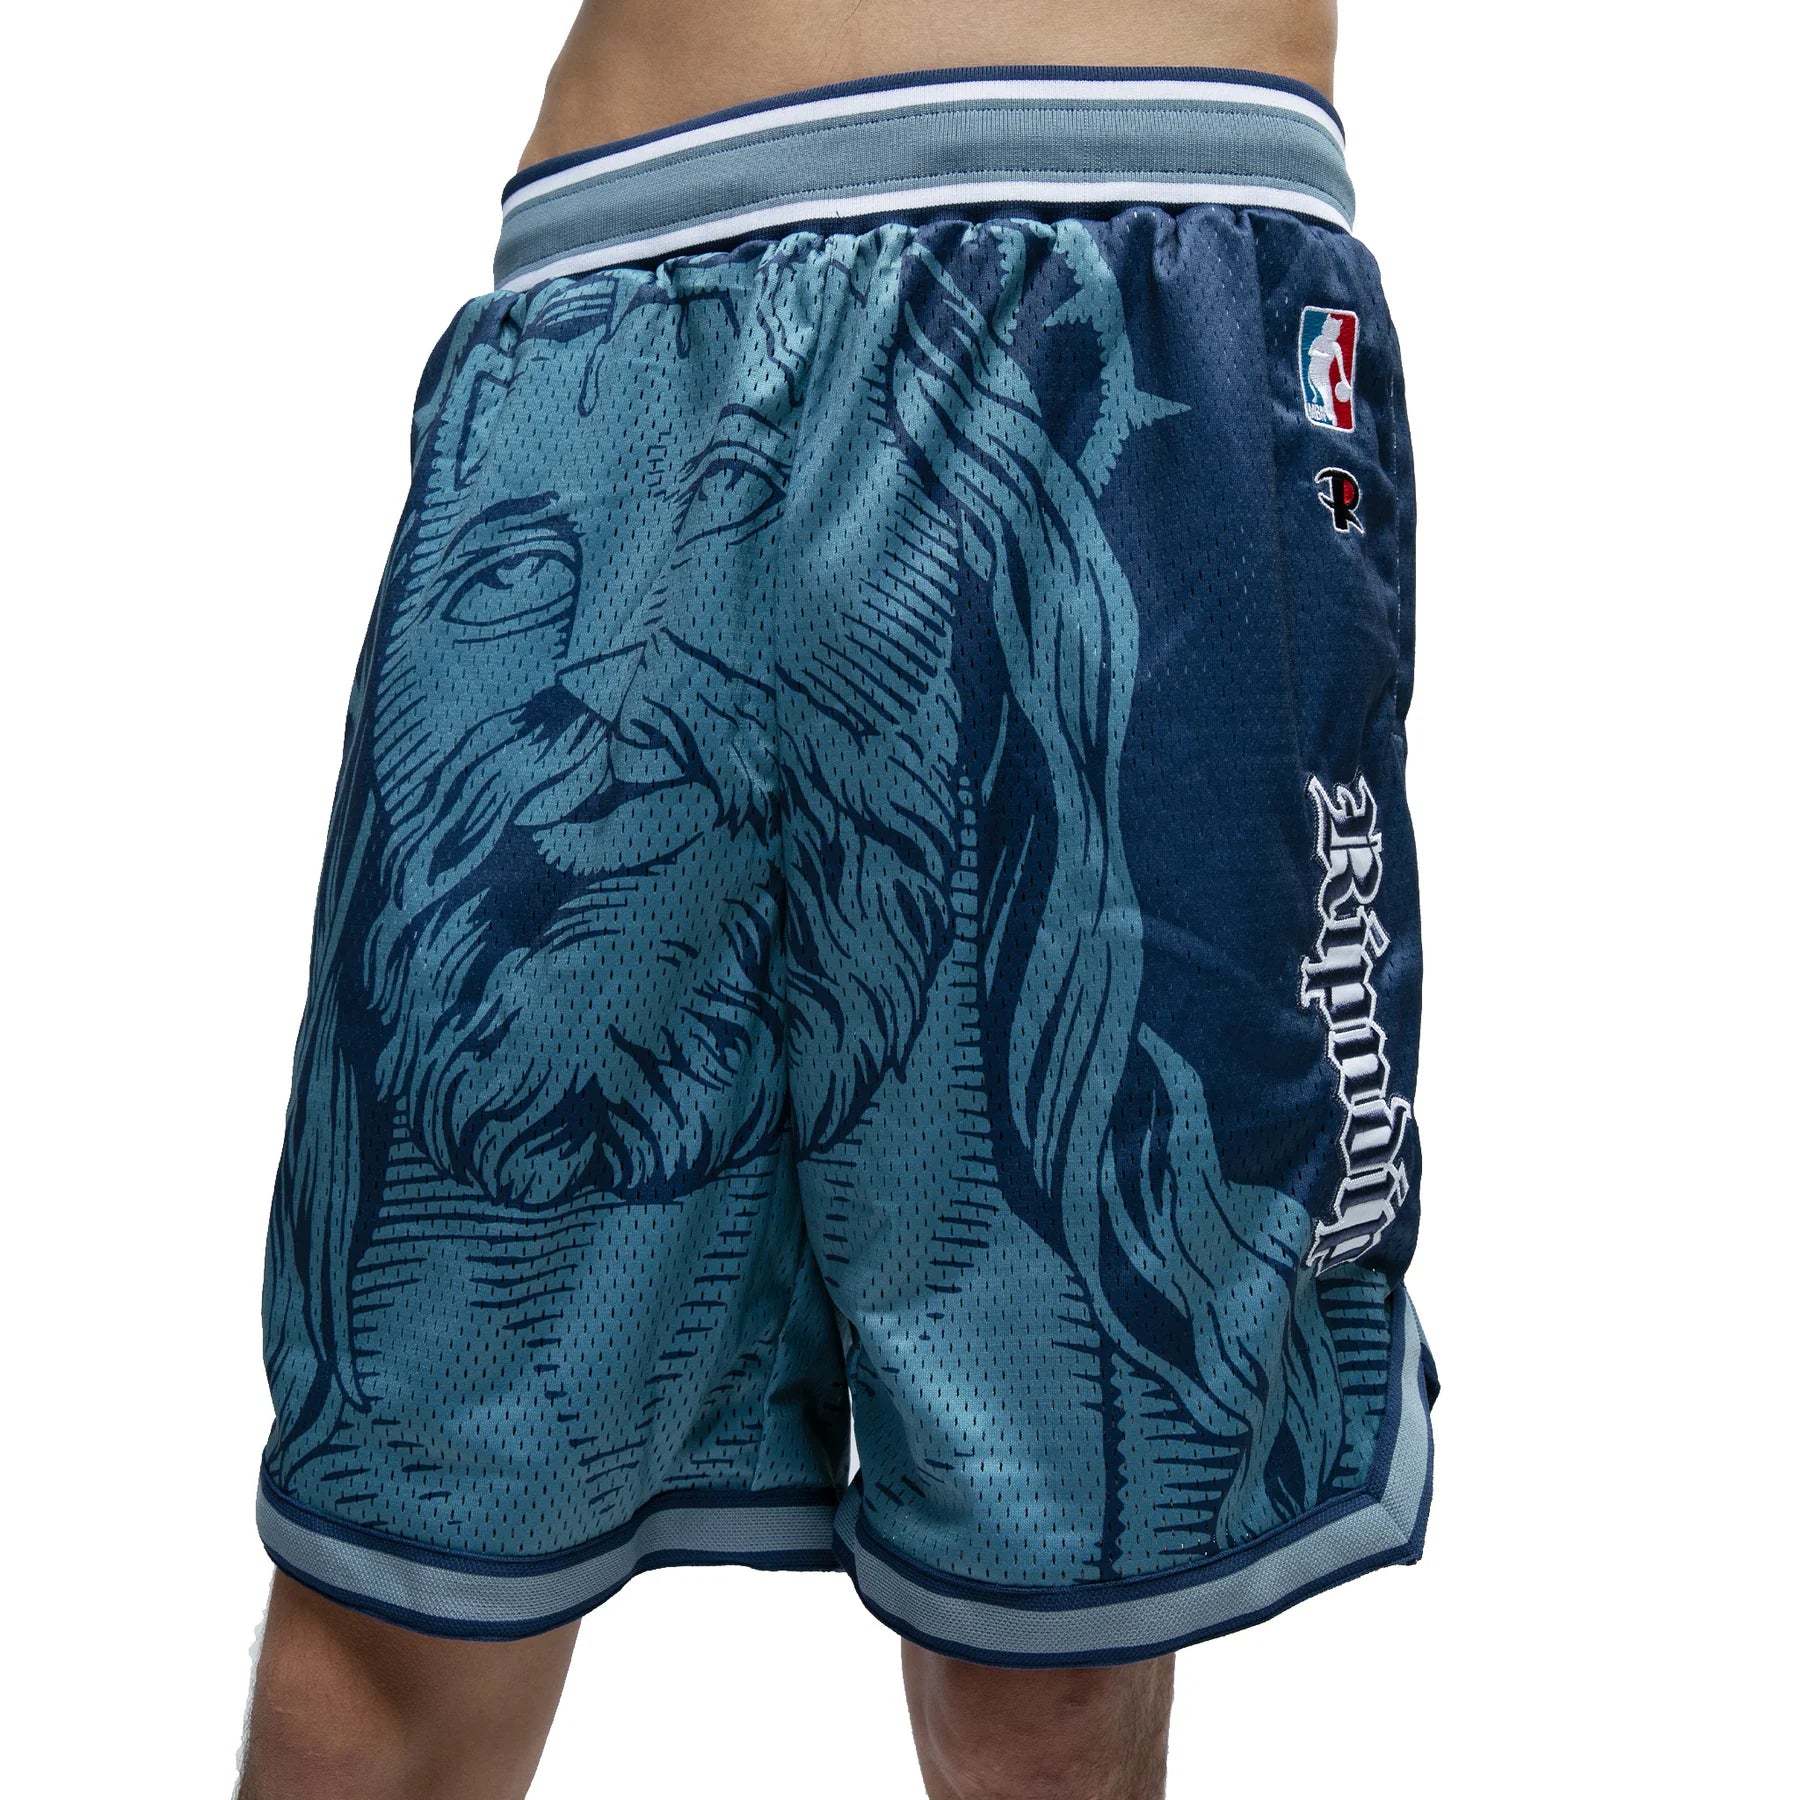 Lord Savior Nerm Basketball shorts (Navy)